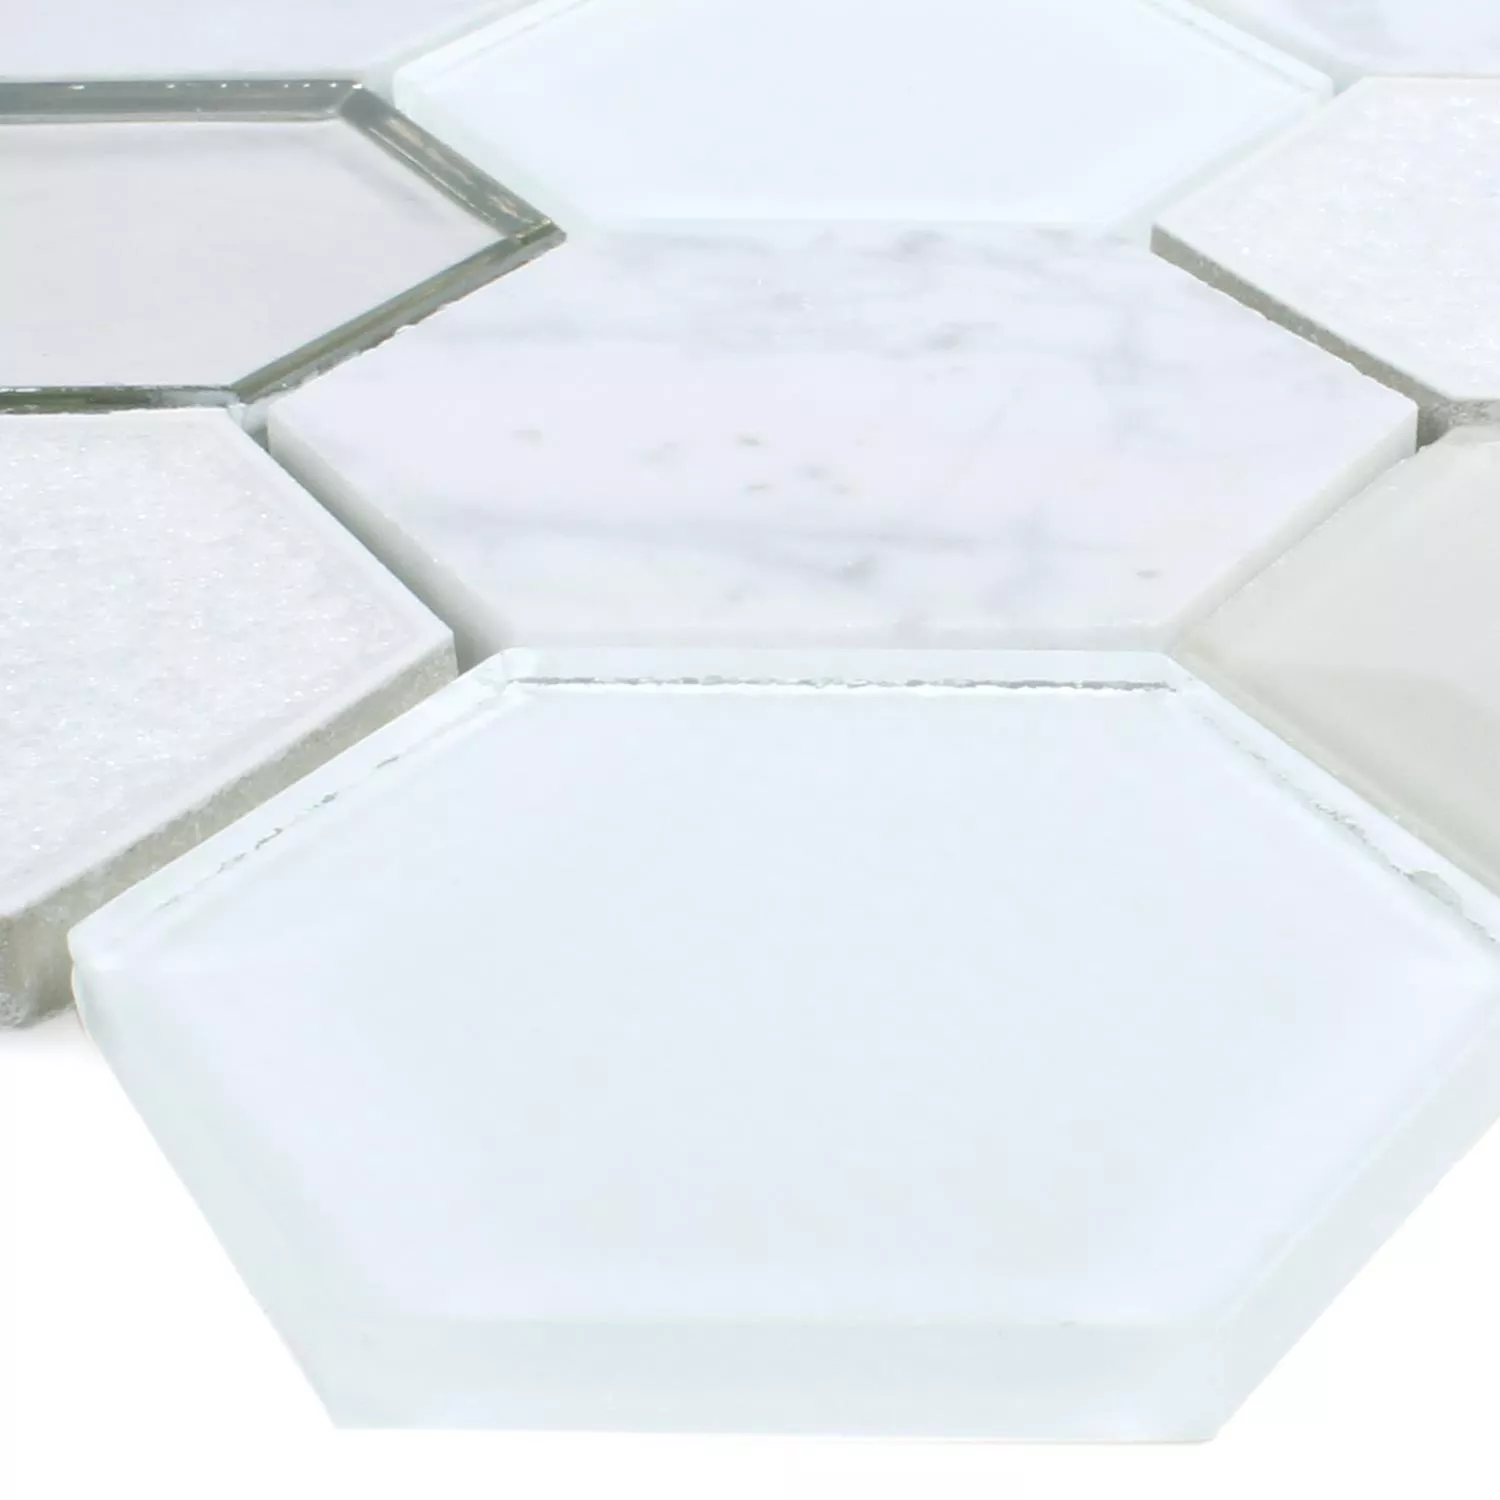 Sample Mosaic Tiles Concrete Glass Natural Stone 3D White